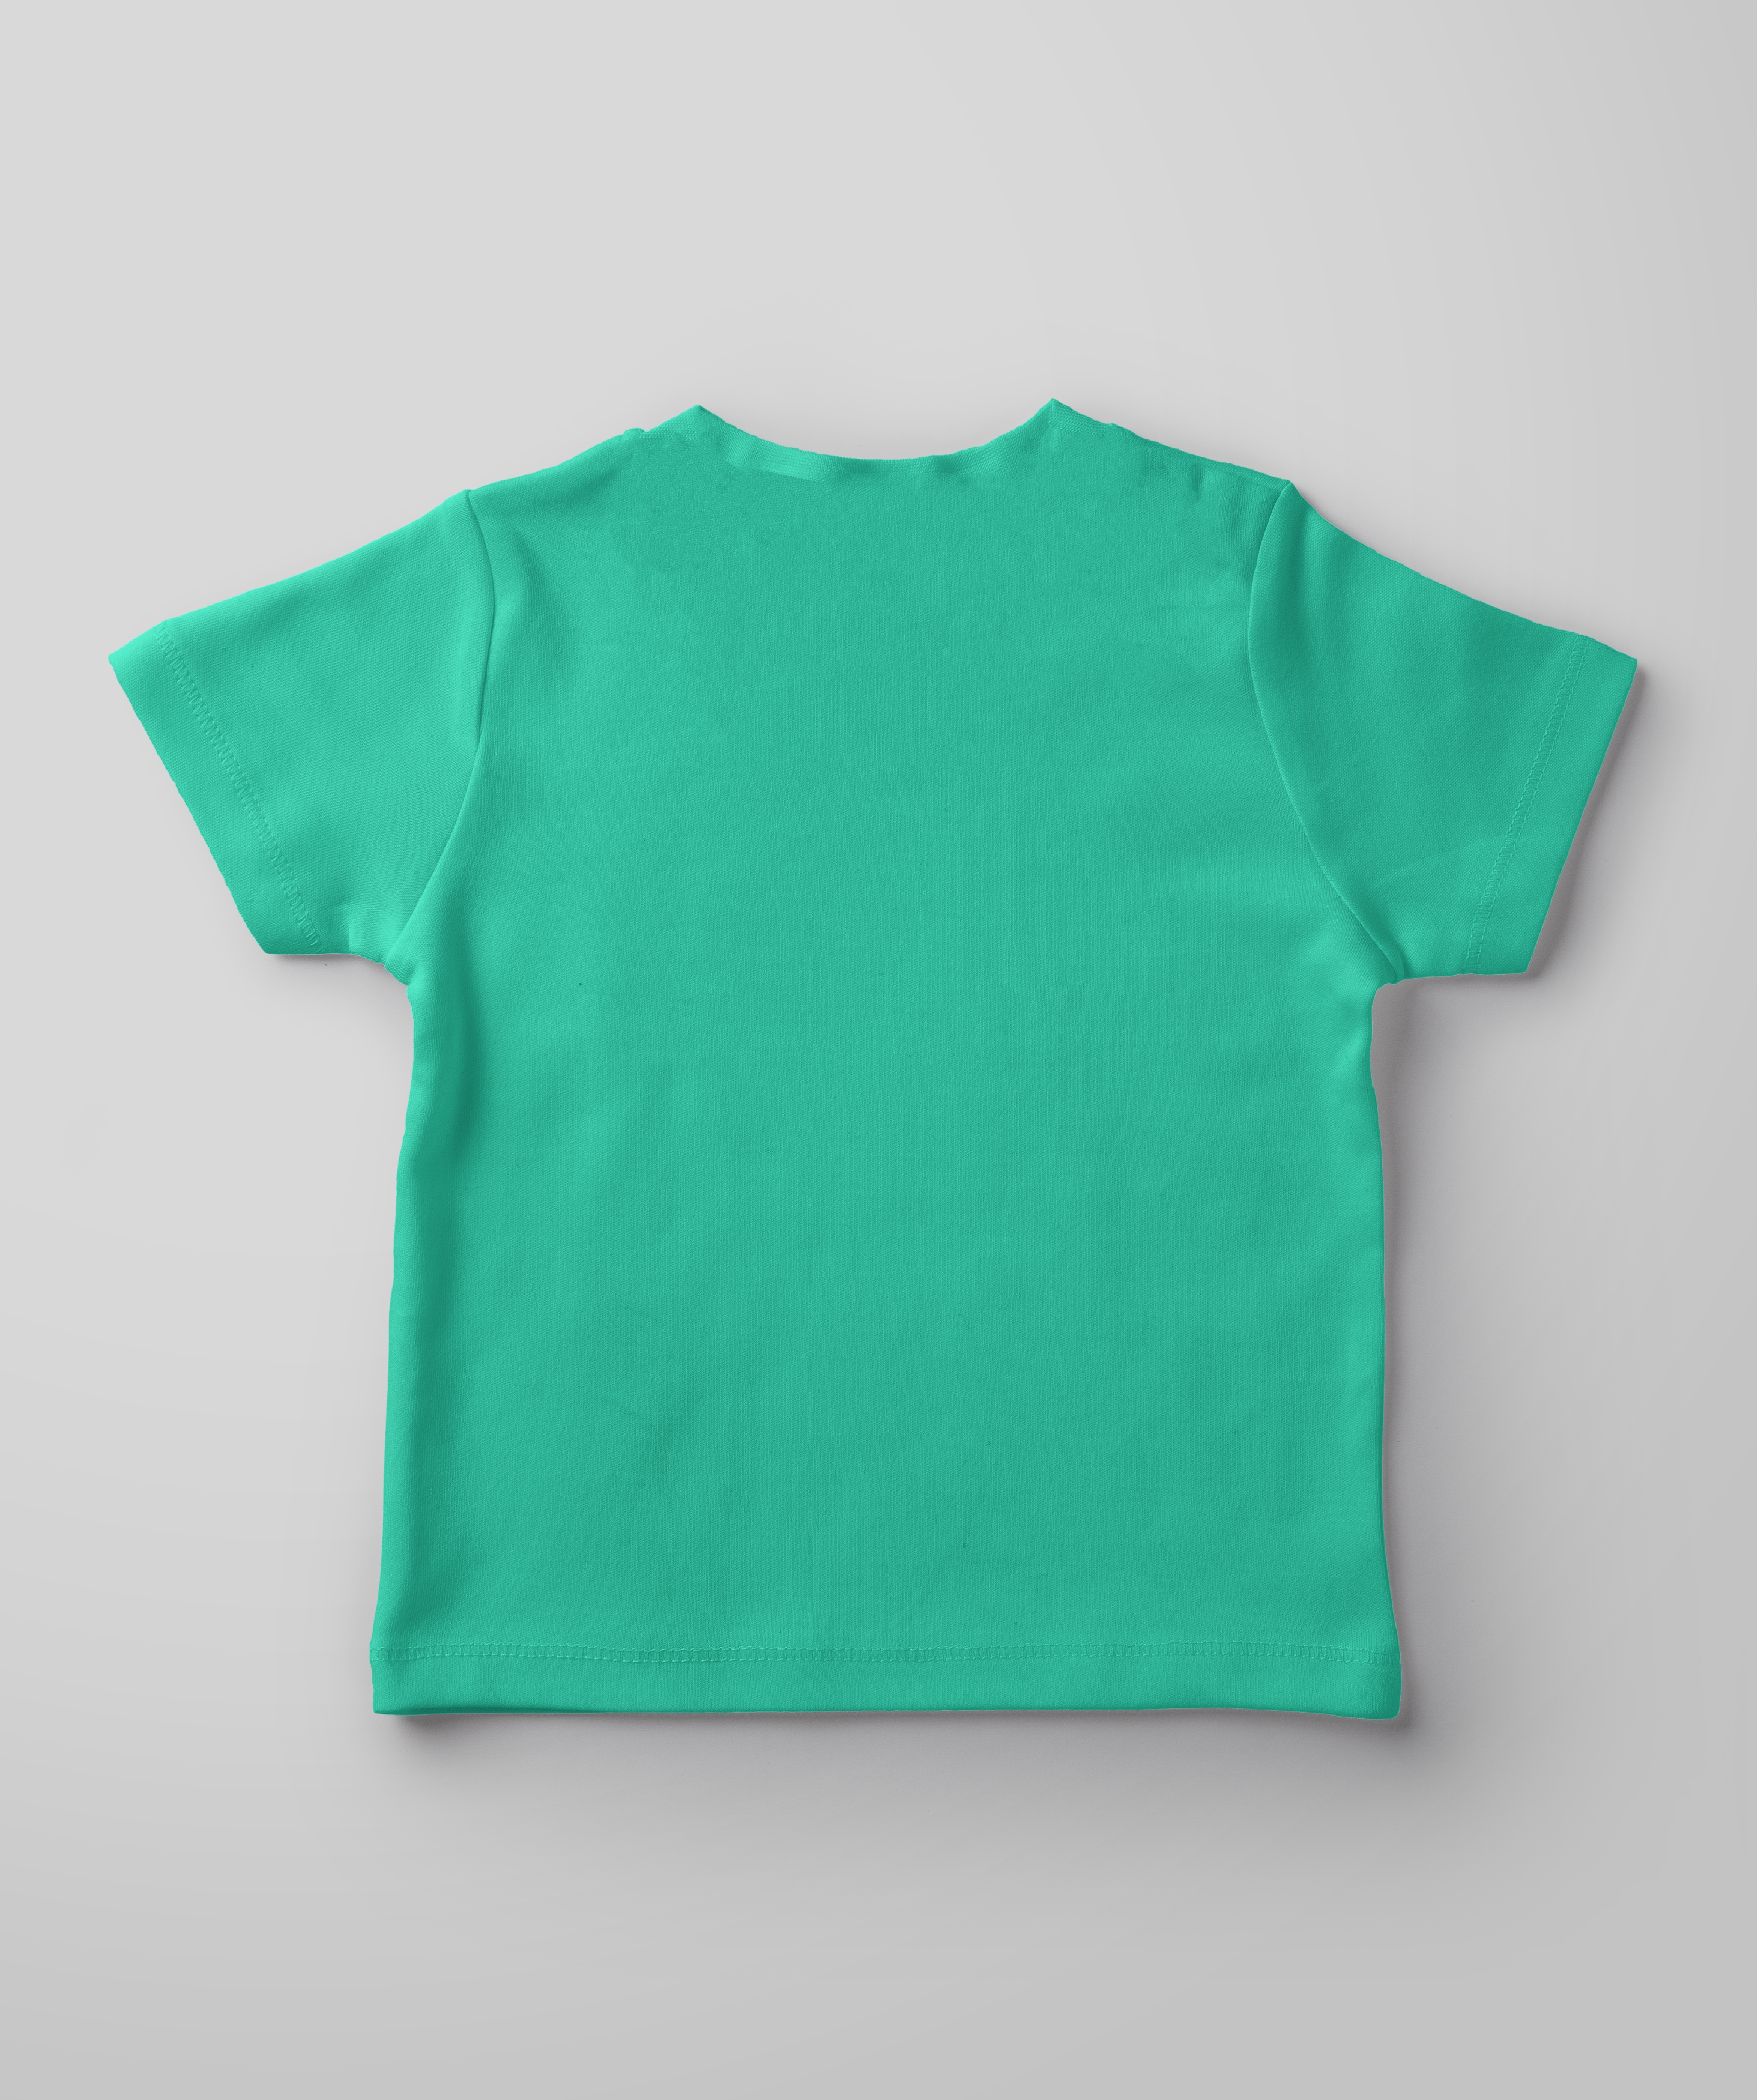 UrGear | UrGear Kids Teal Green Hand Printed Cotton T-Shirt 1